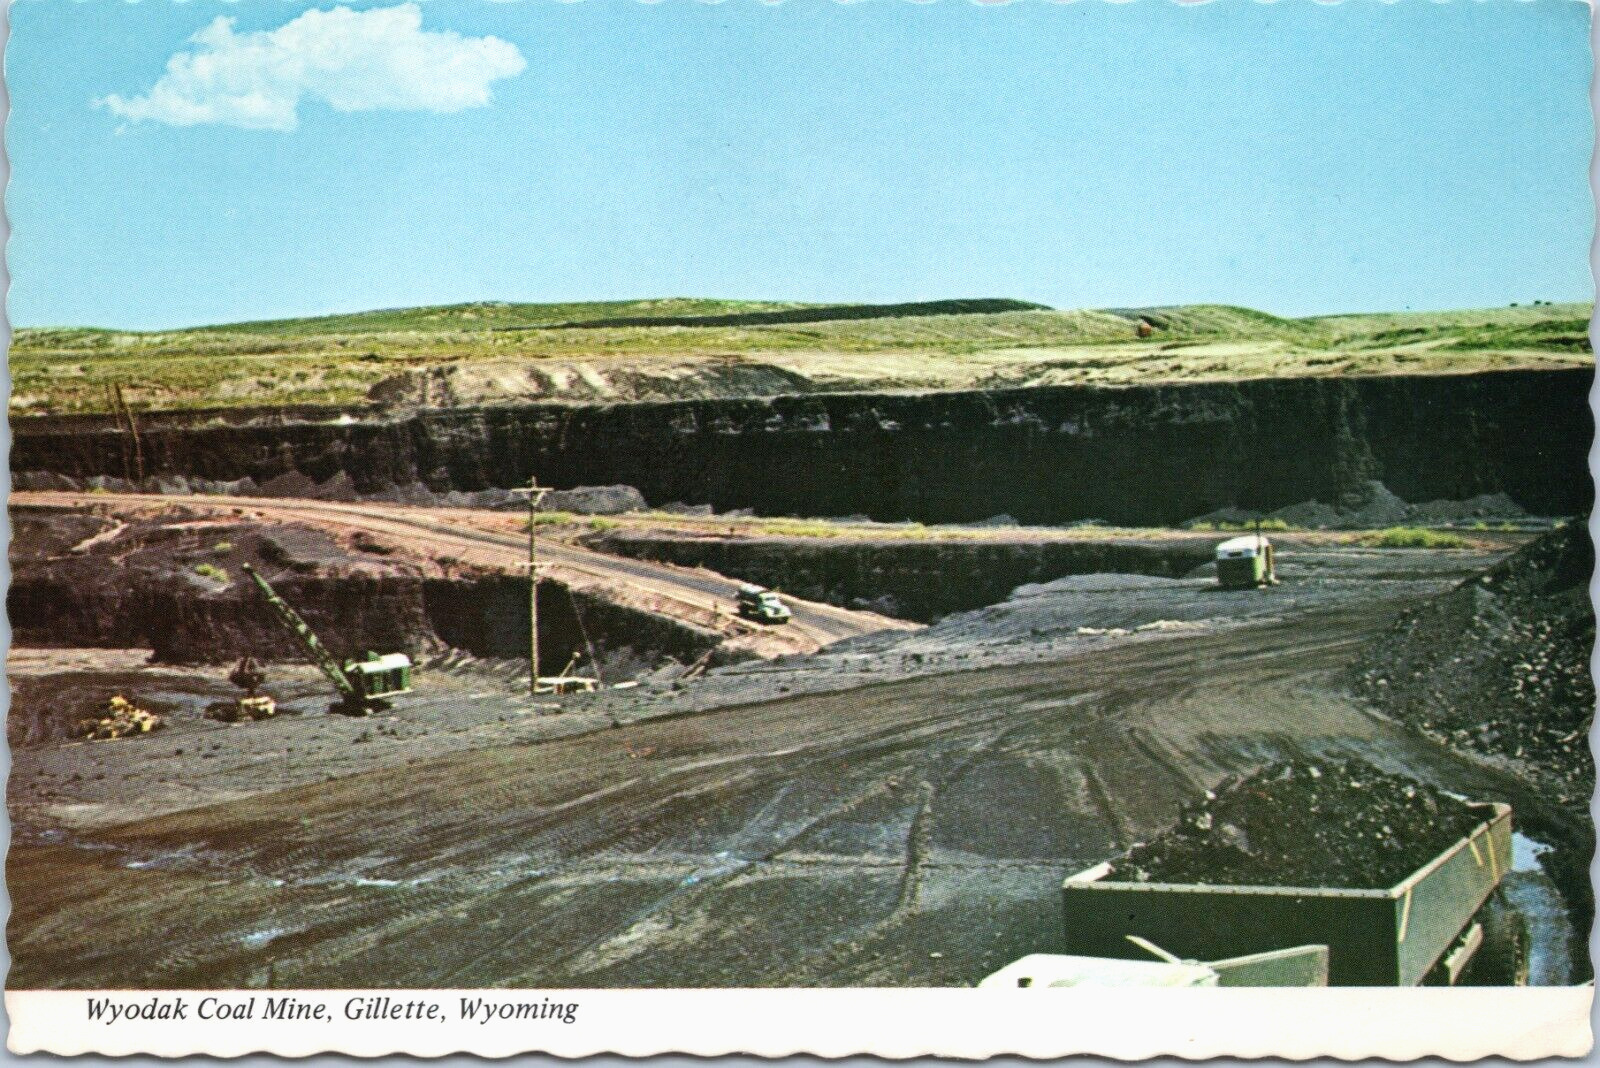 Wyodak Coal lignite Deposit Mine Gillette Wyoming Mining Equipment Campbell Co.